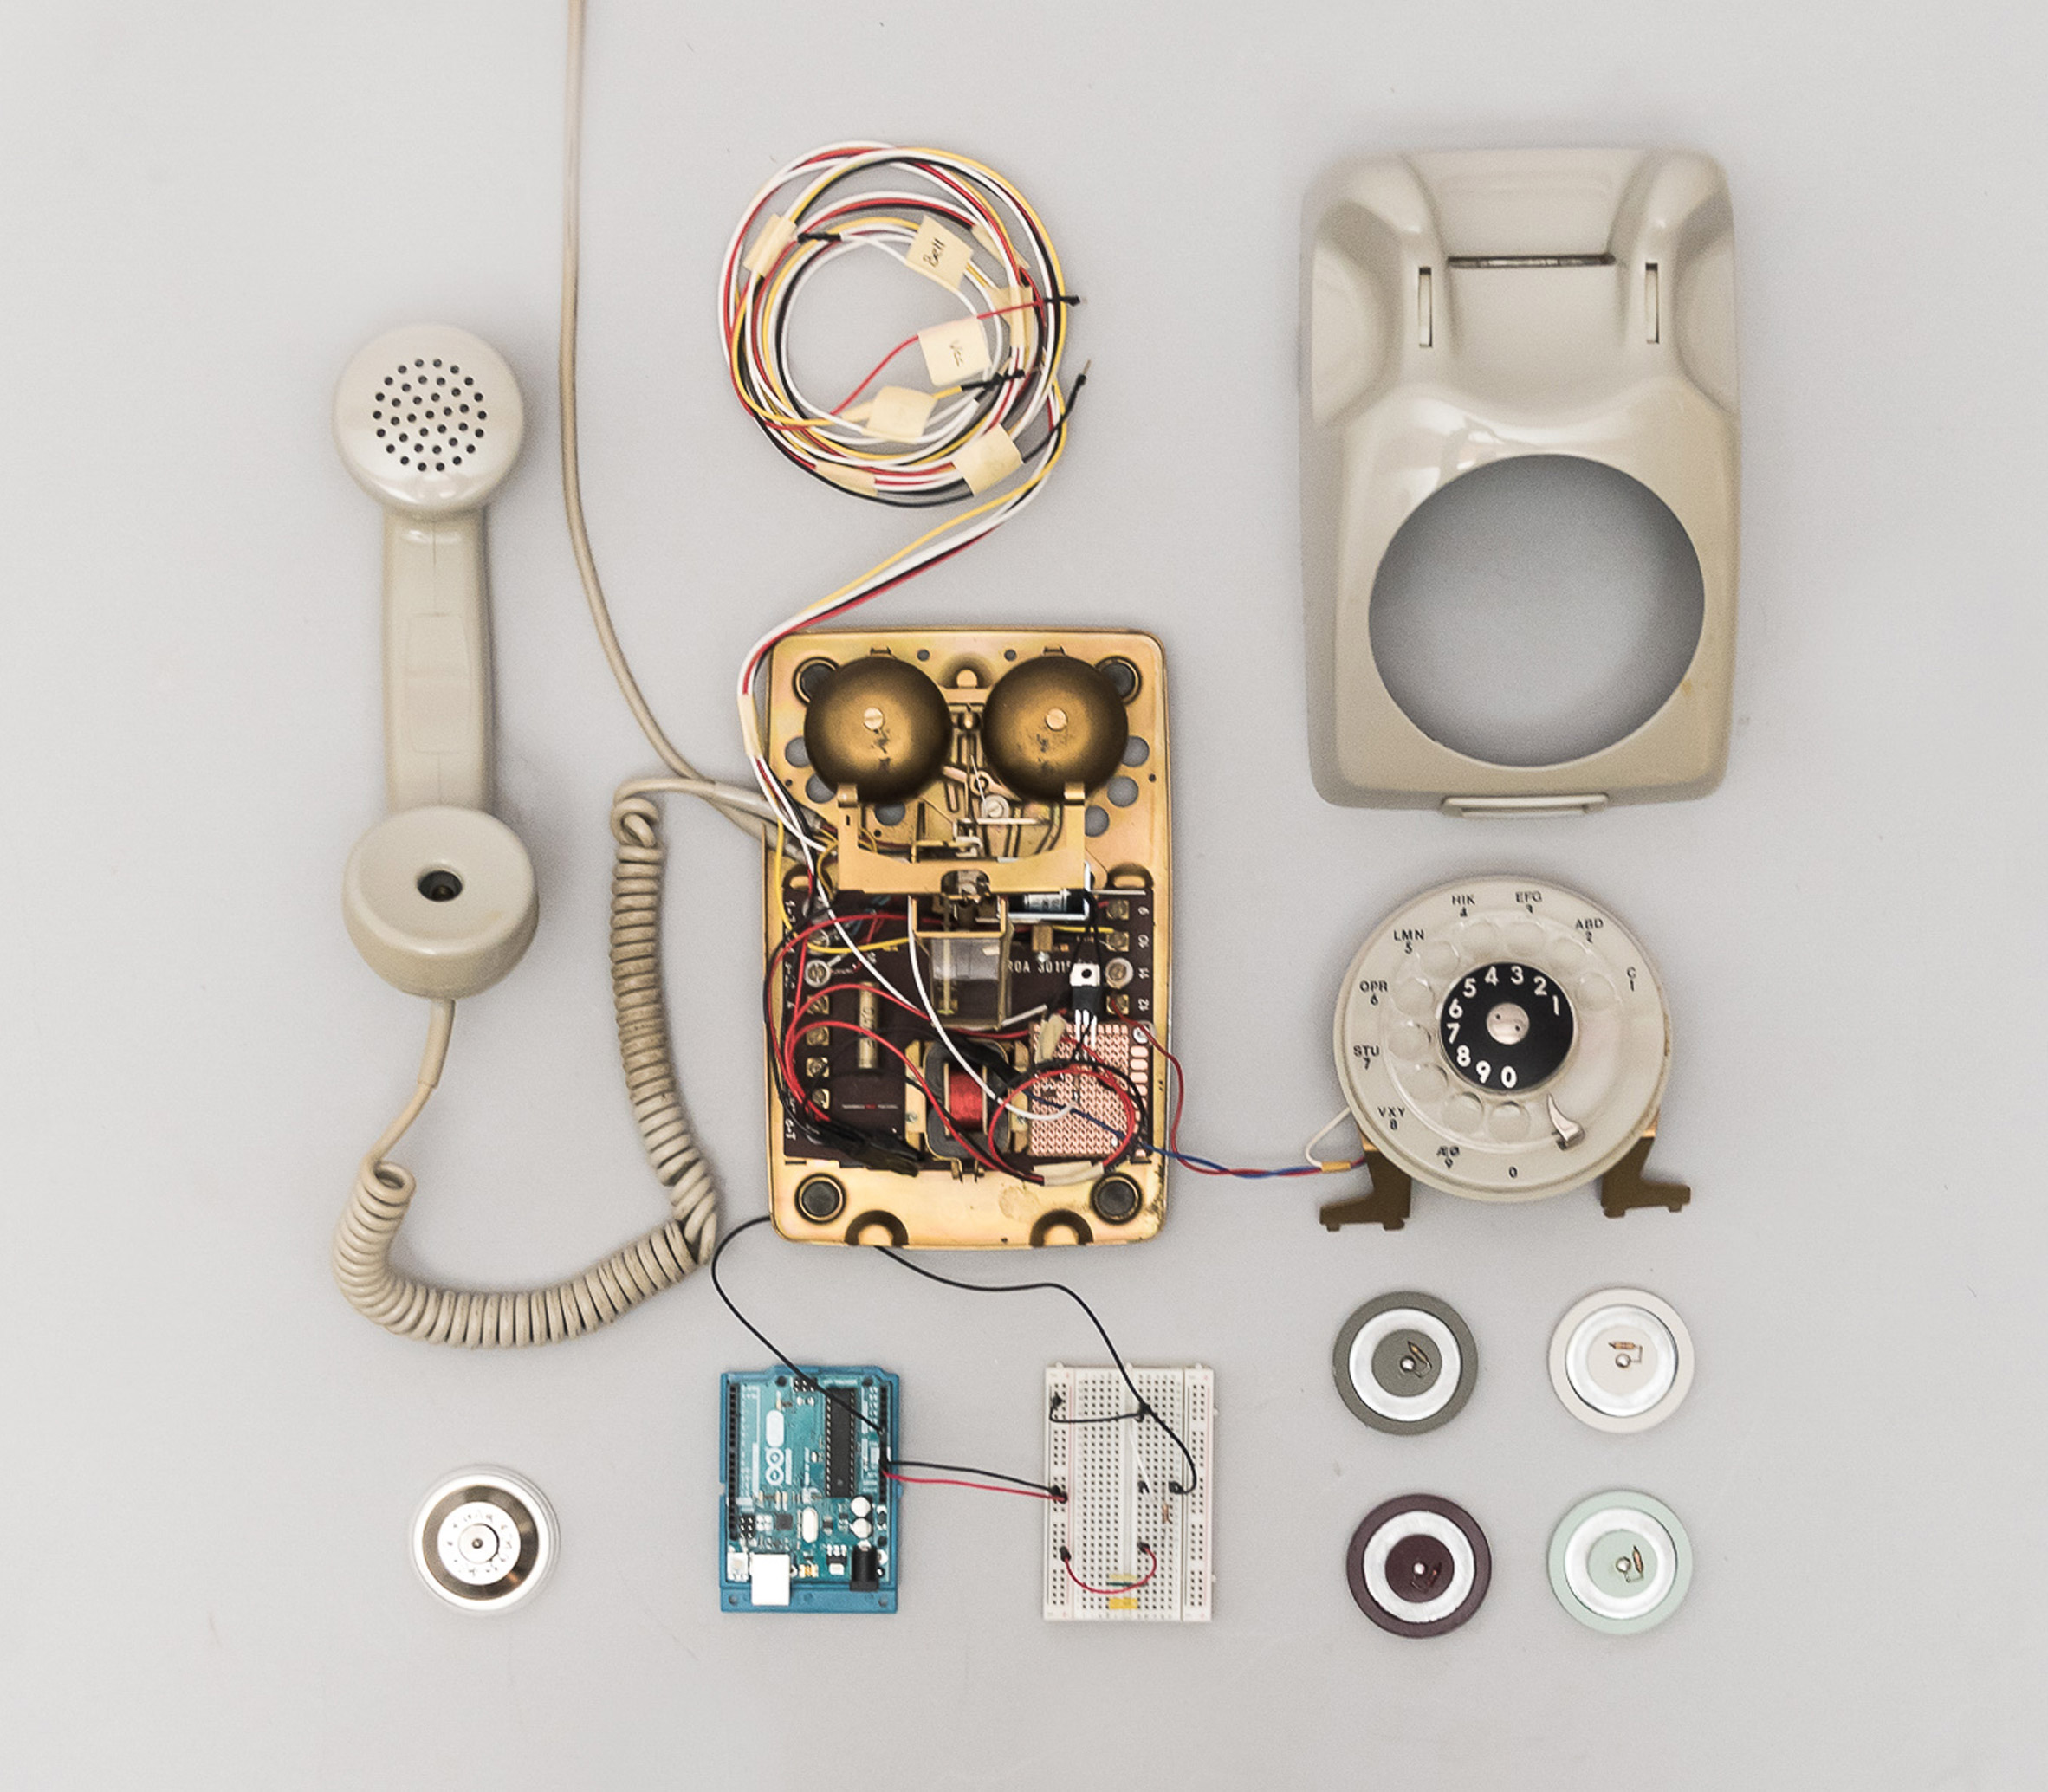 The Internet Phone by Copenhagen Institute of Interaction Design